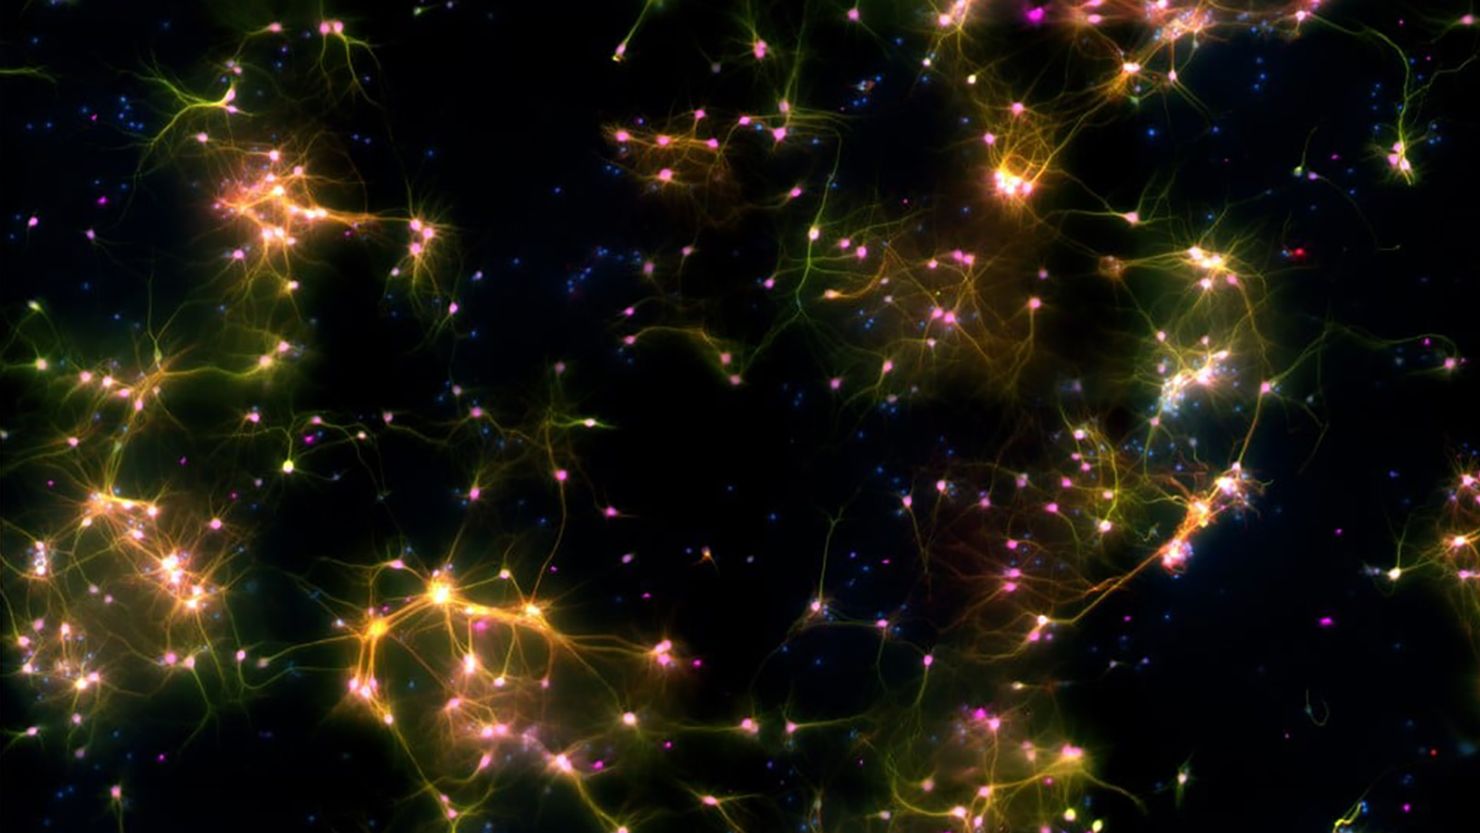 The neurons in a petri dish under a microscope